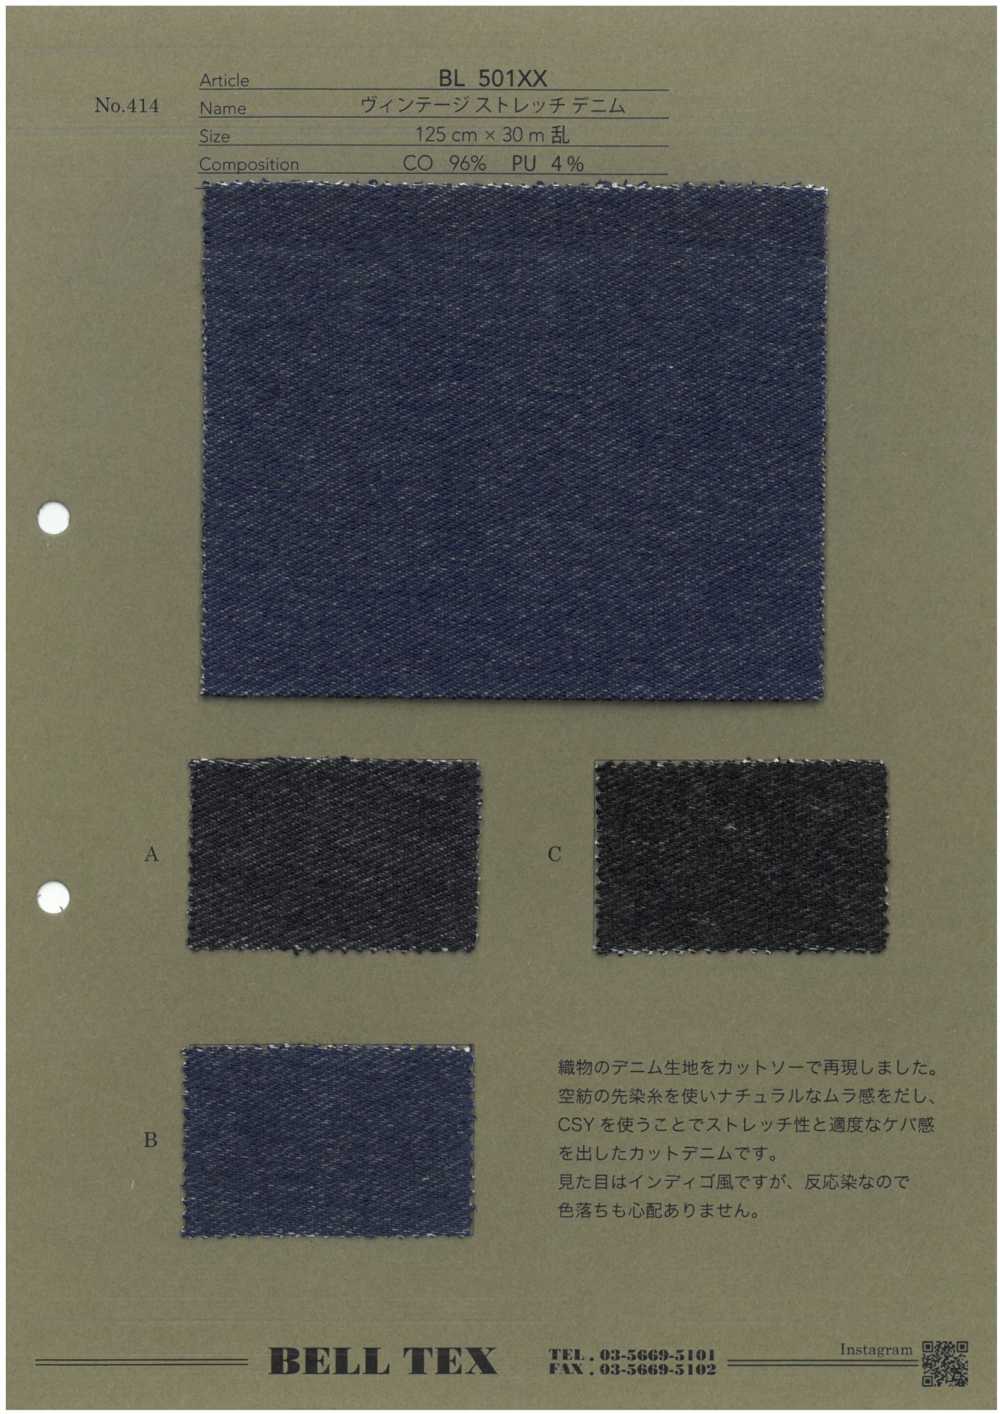 BL501XX [Textile / Fabric] Vertex